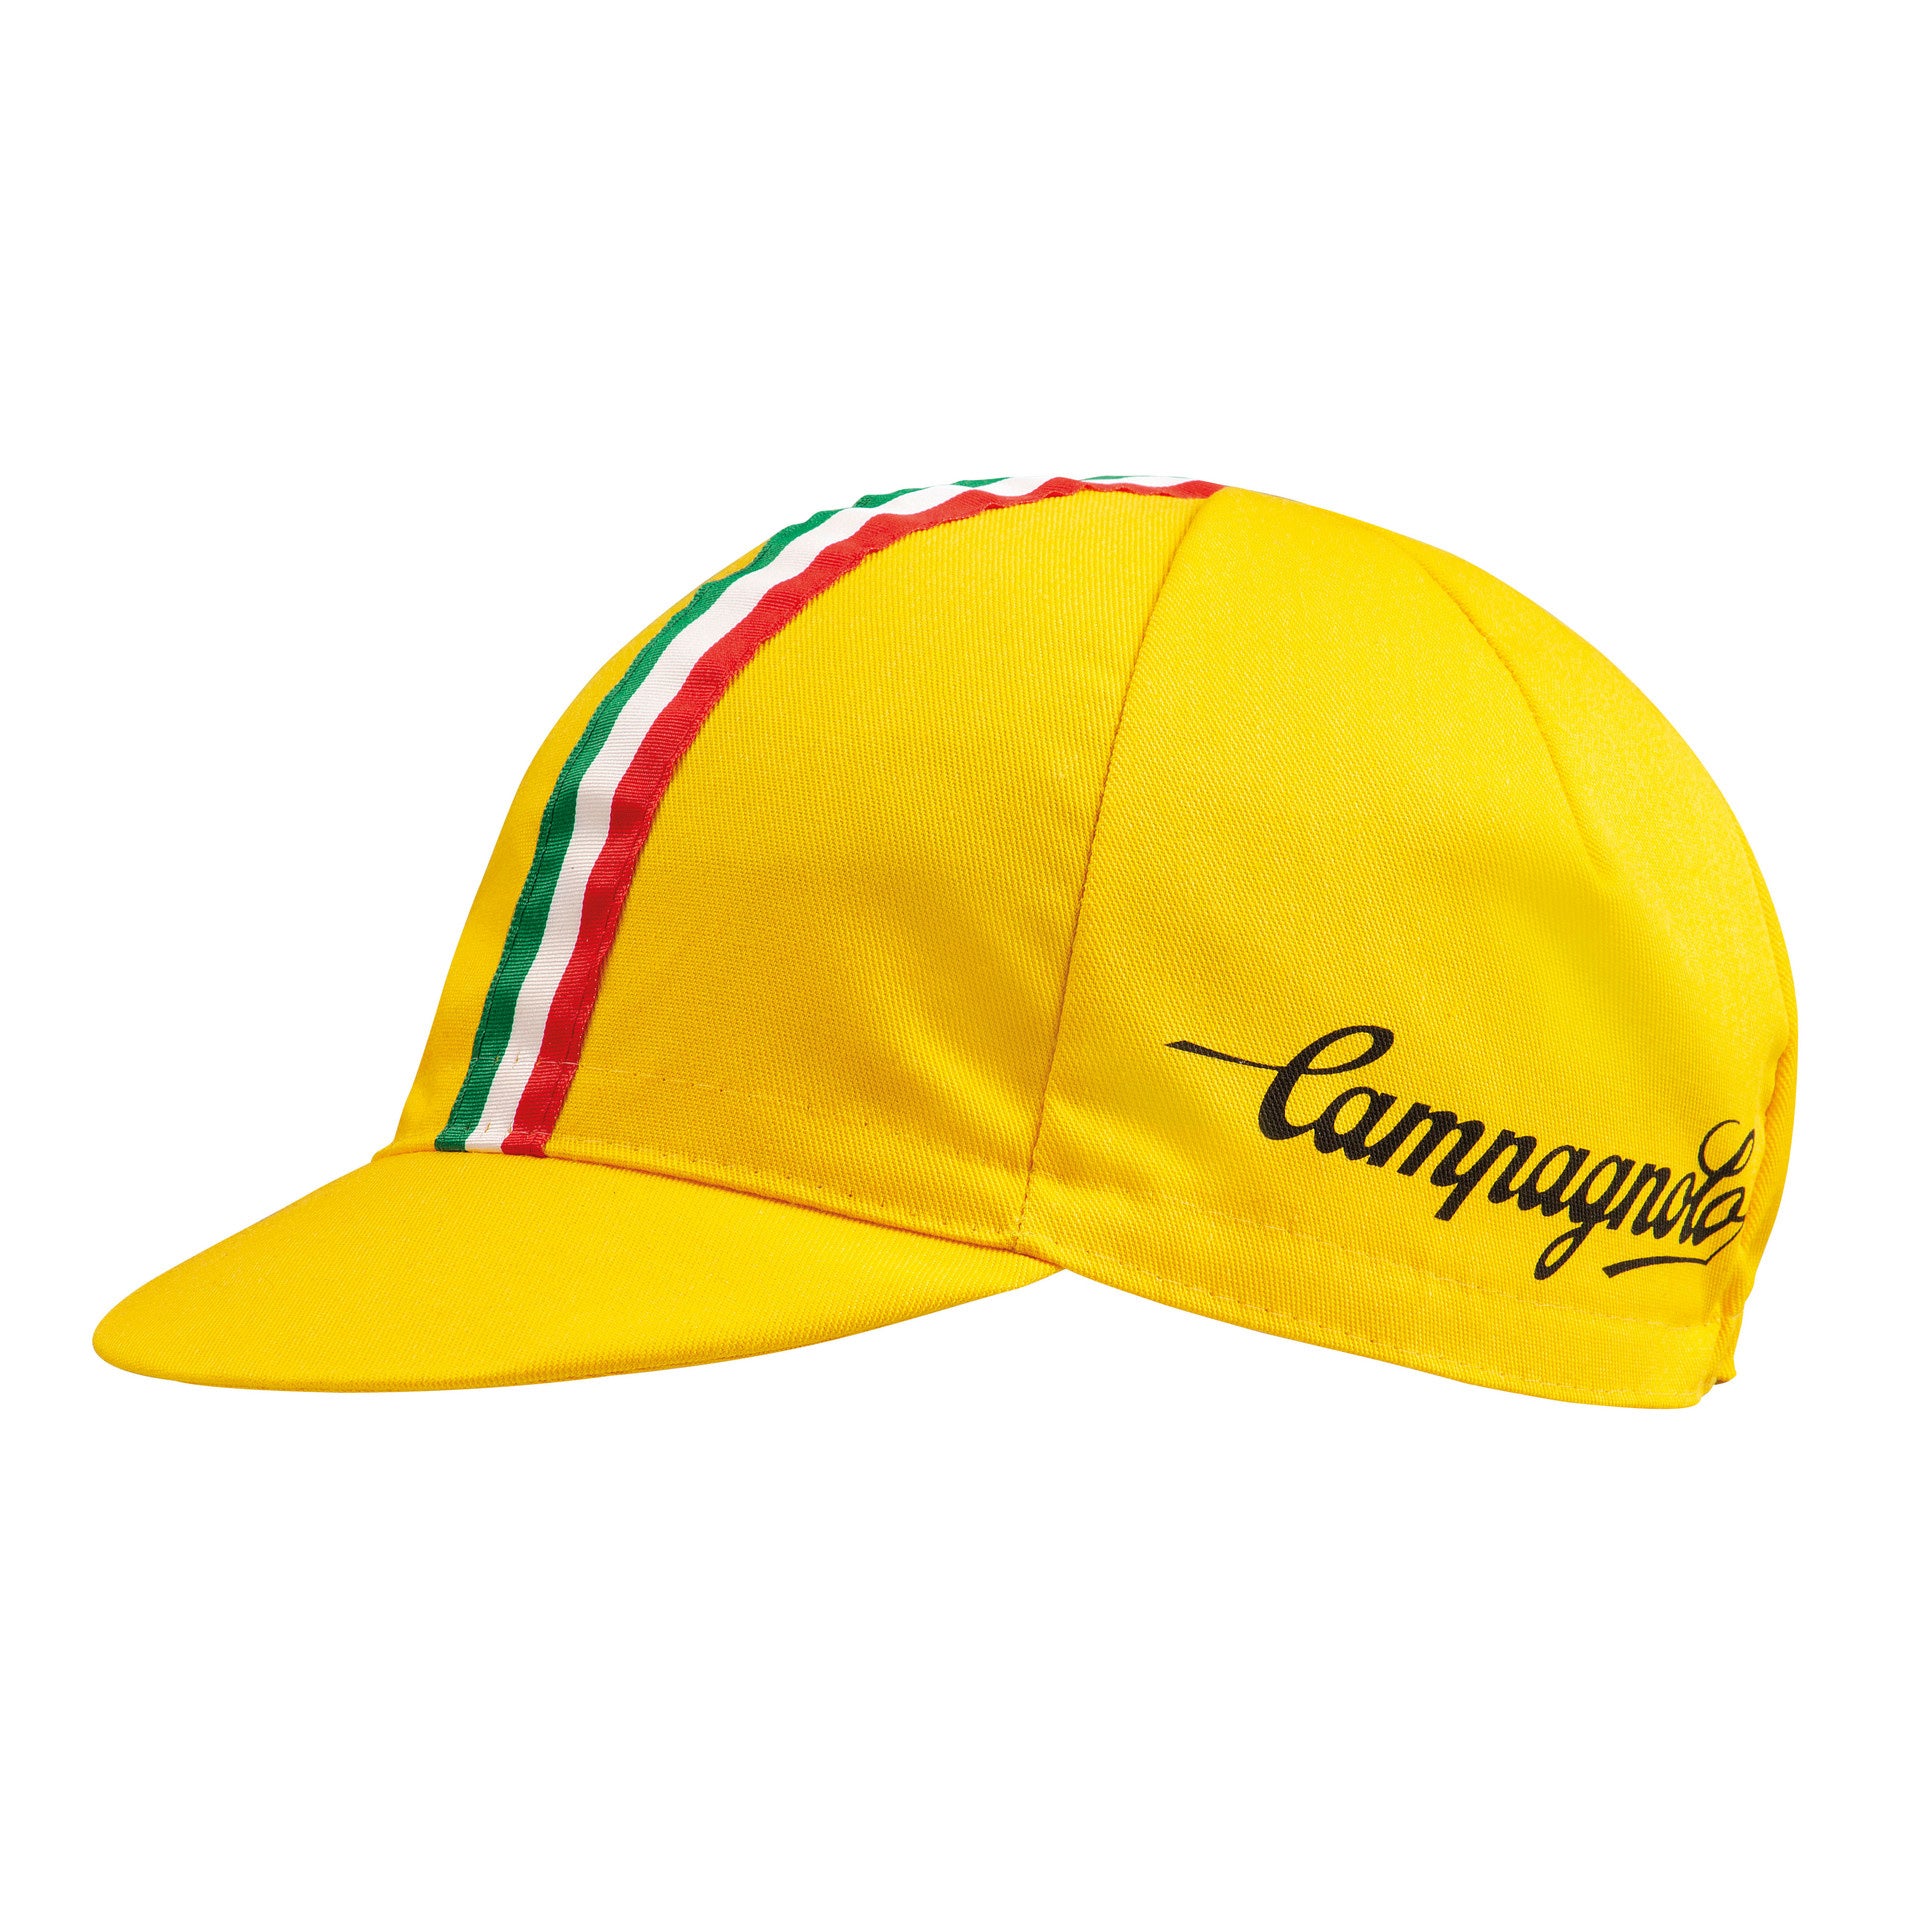 campagnolo hat